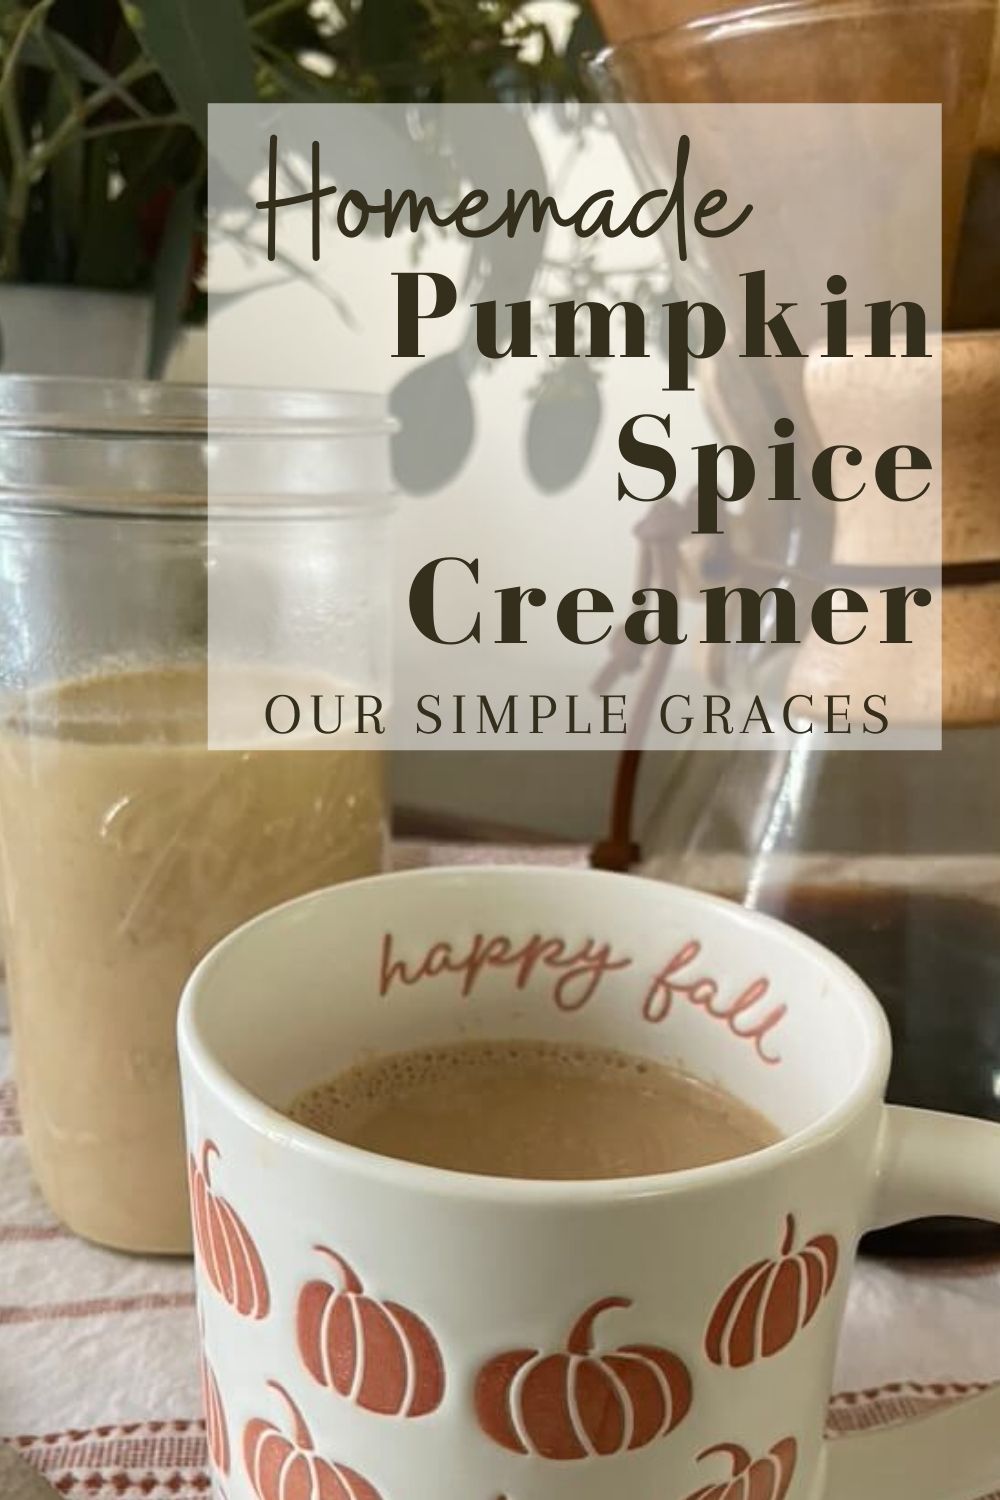 pumpkin spice coffee creamer in glass jar and mug of coffee